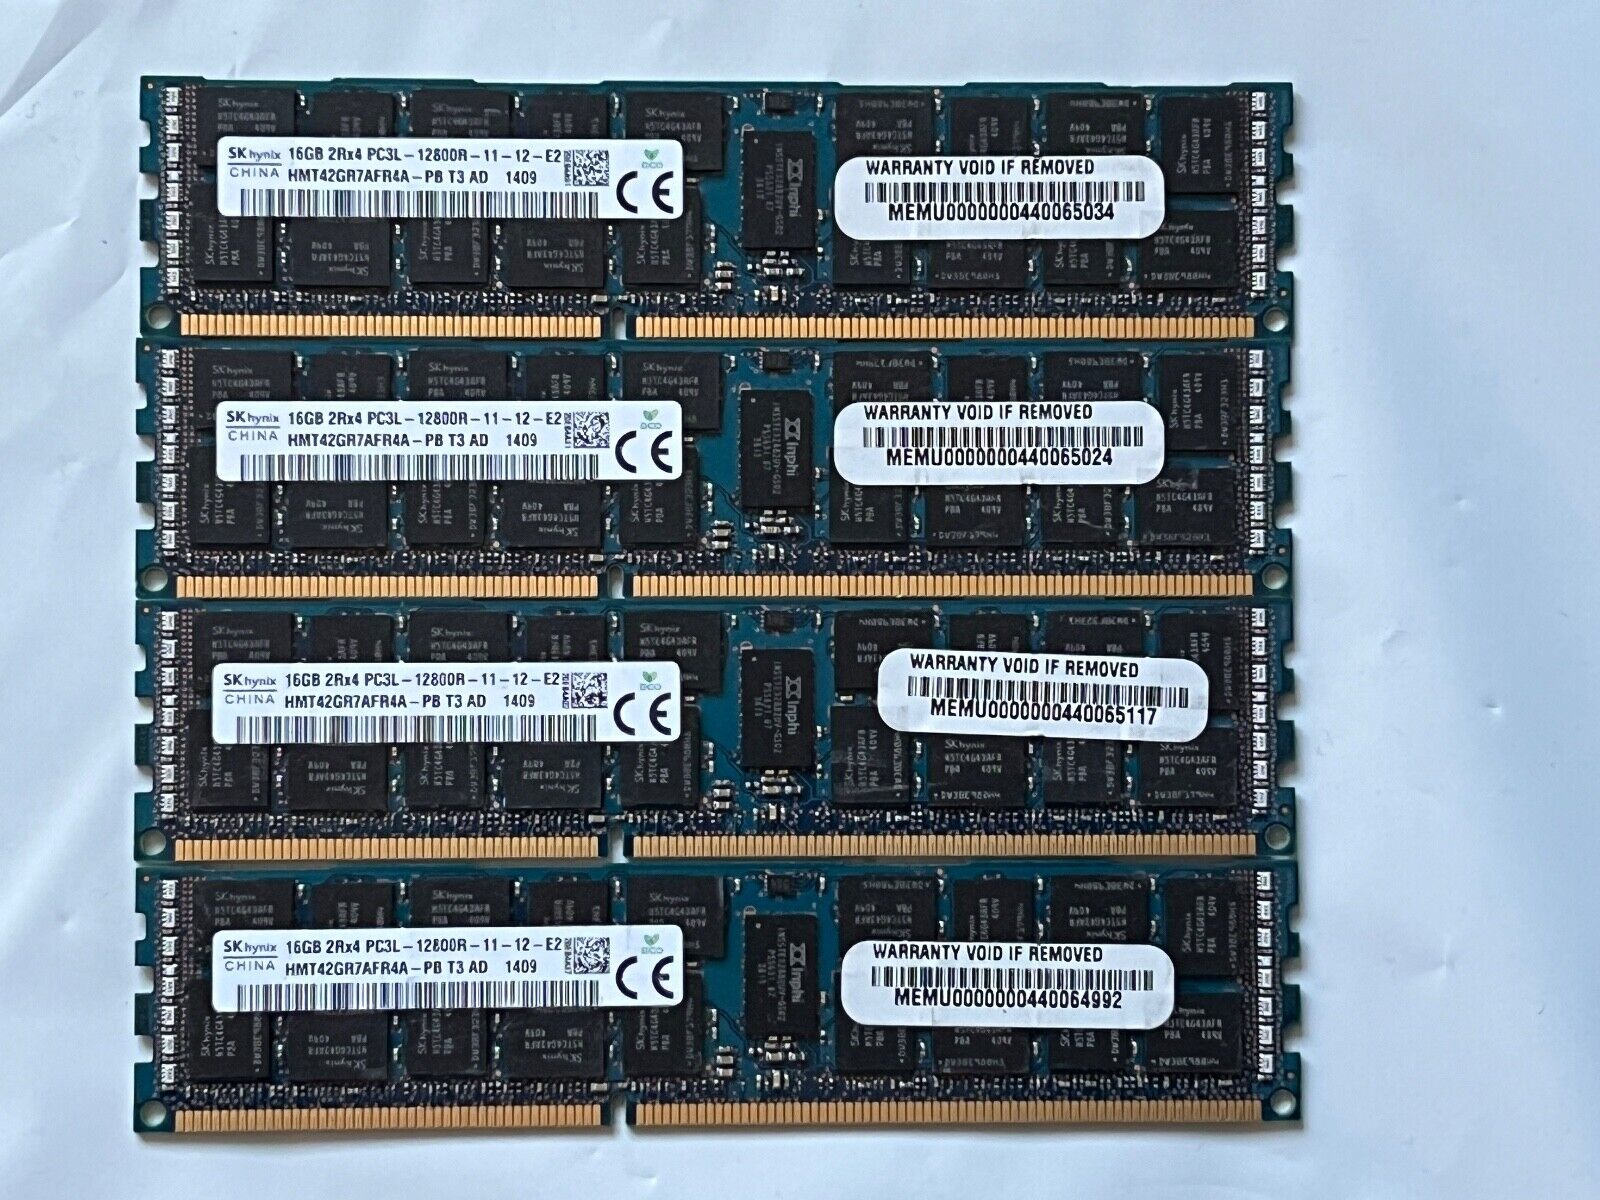 SK Hynix 64GB (4 x 16GB) PC3L-12800R DDR3 1600MHz ECC Server RAM HMT42GR7AFR4A